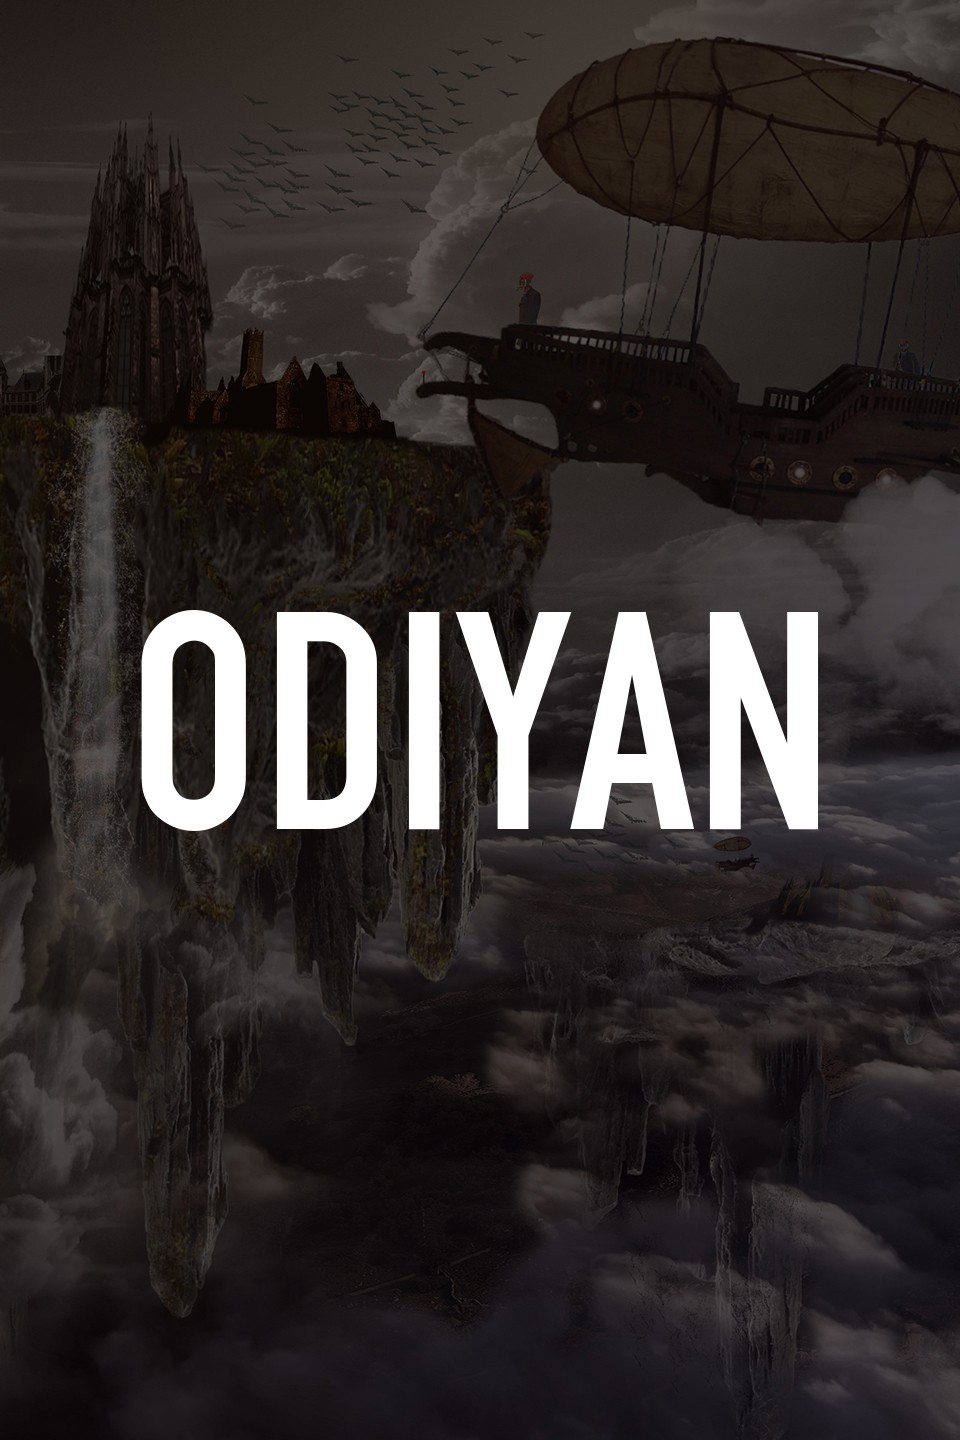 Odiyan Official Trailer - DGZ Media